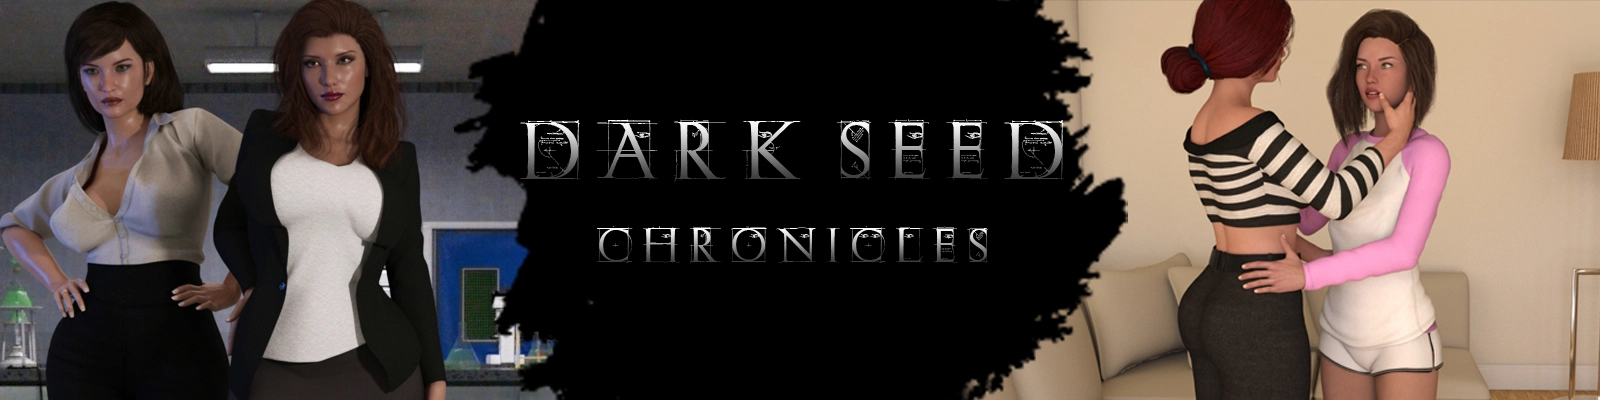 Dark Seed Chronicles [v1.3] main image